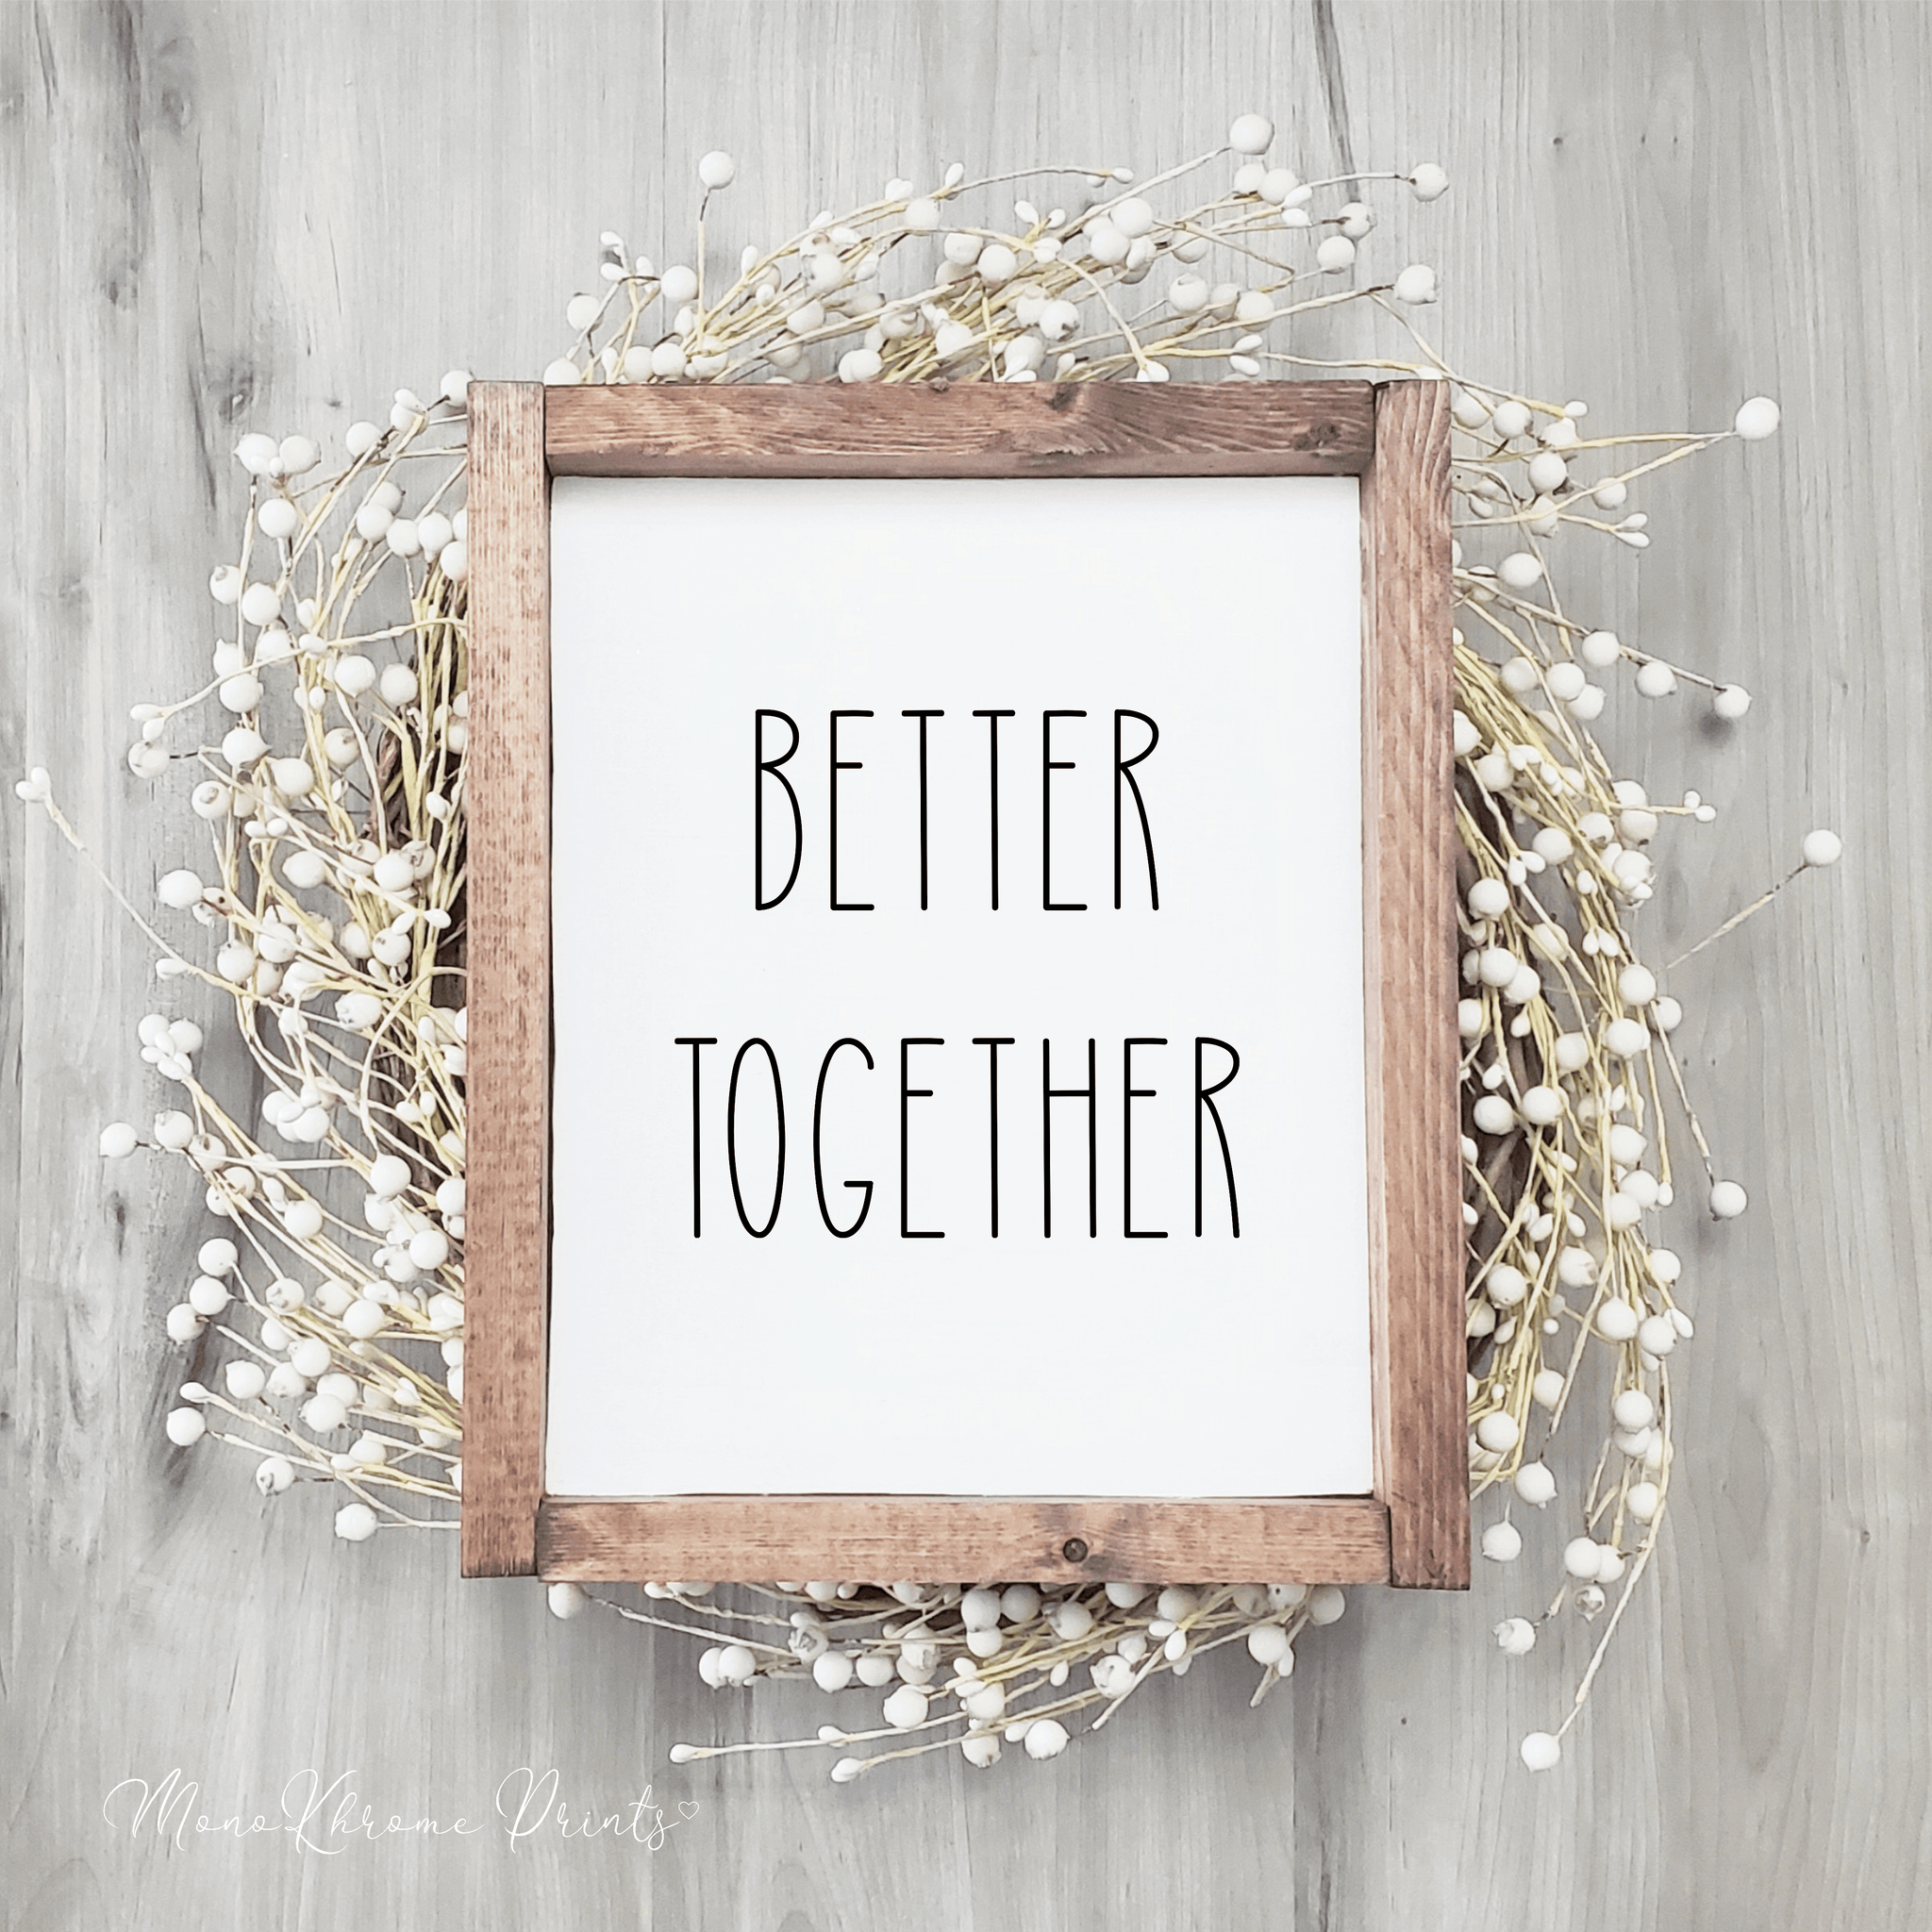 Better together - Affiche décorative